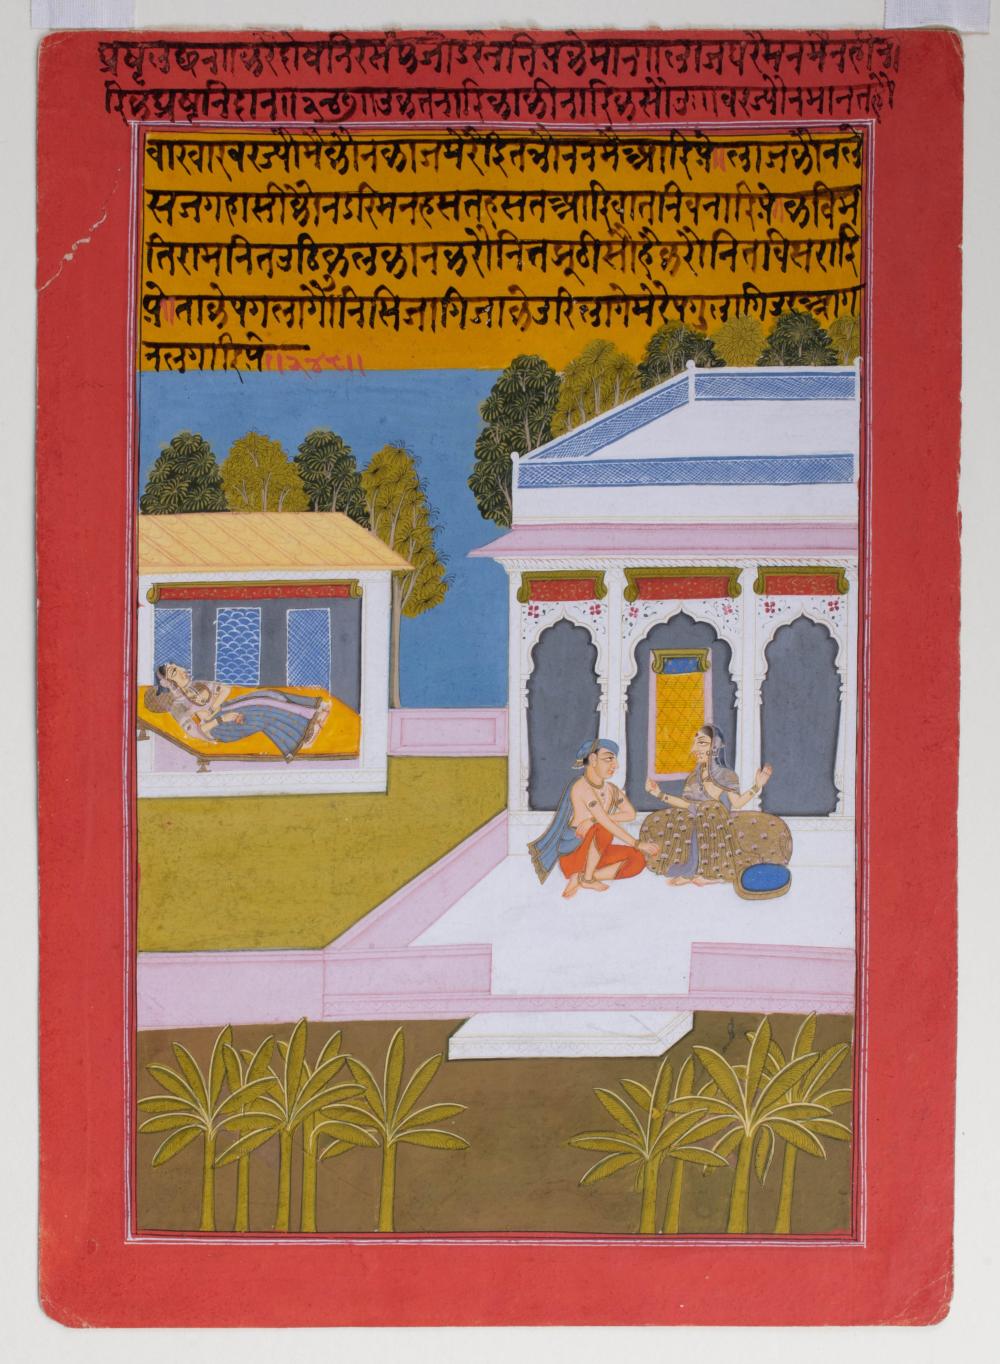 INDIA, DATIA, CIRCA 1780, AN ILLUSTRATION